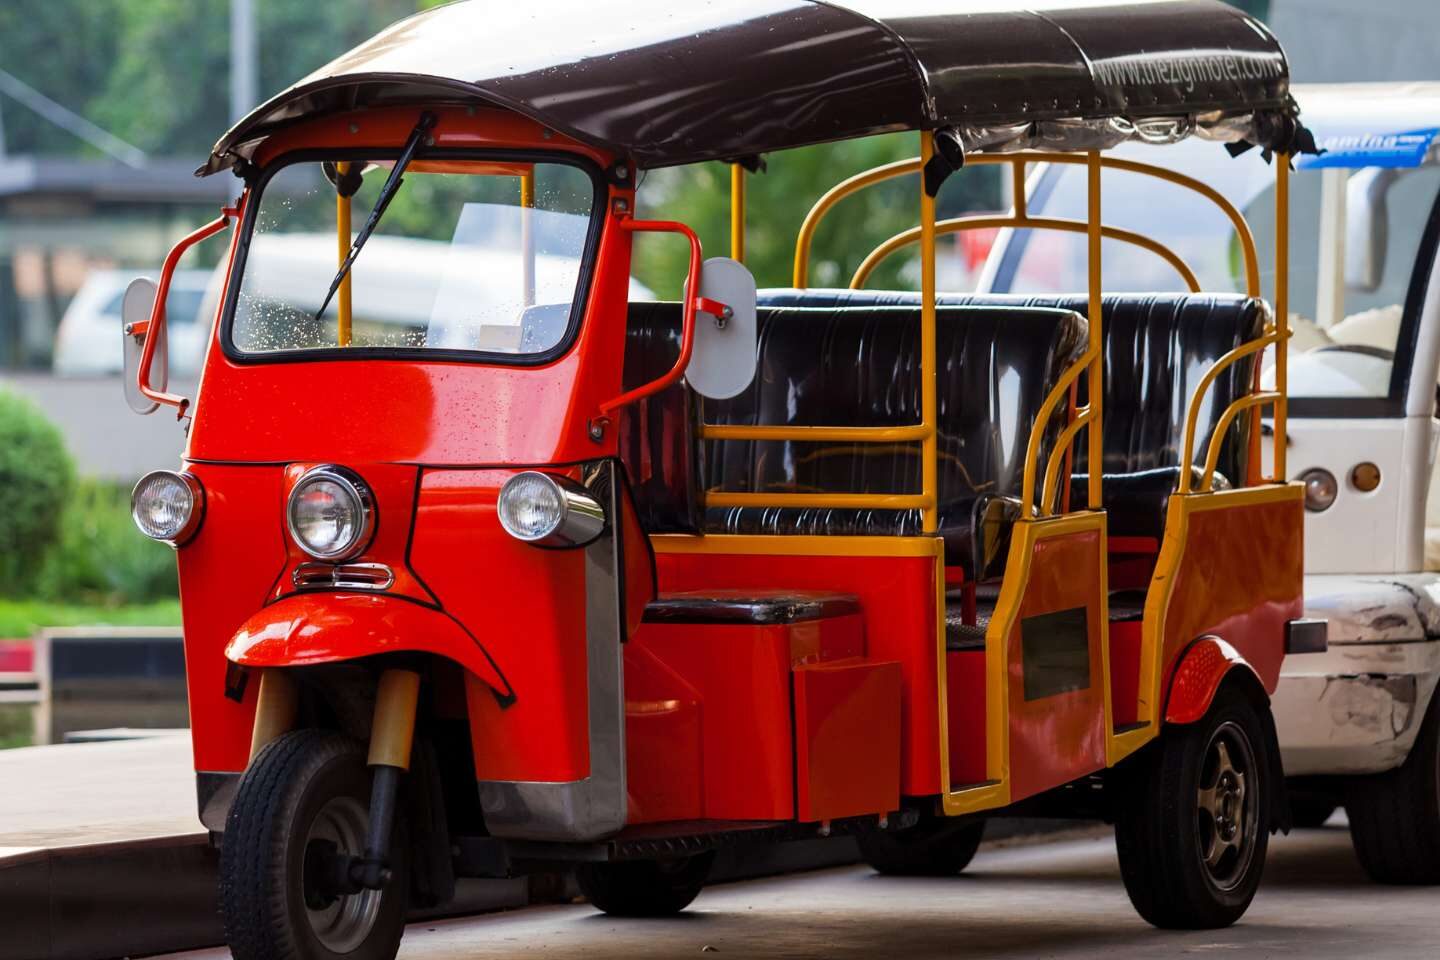 Popular tuktuk vehicle in Thailand